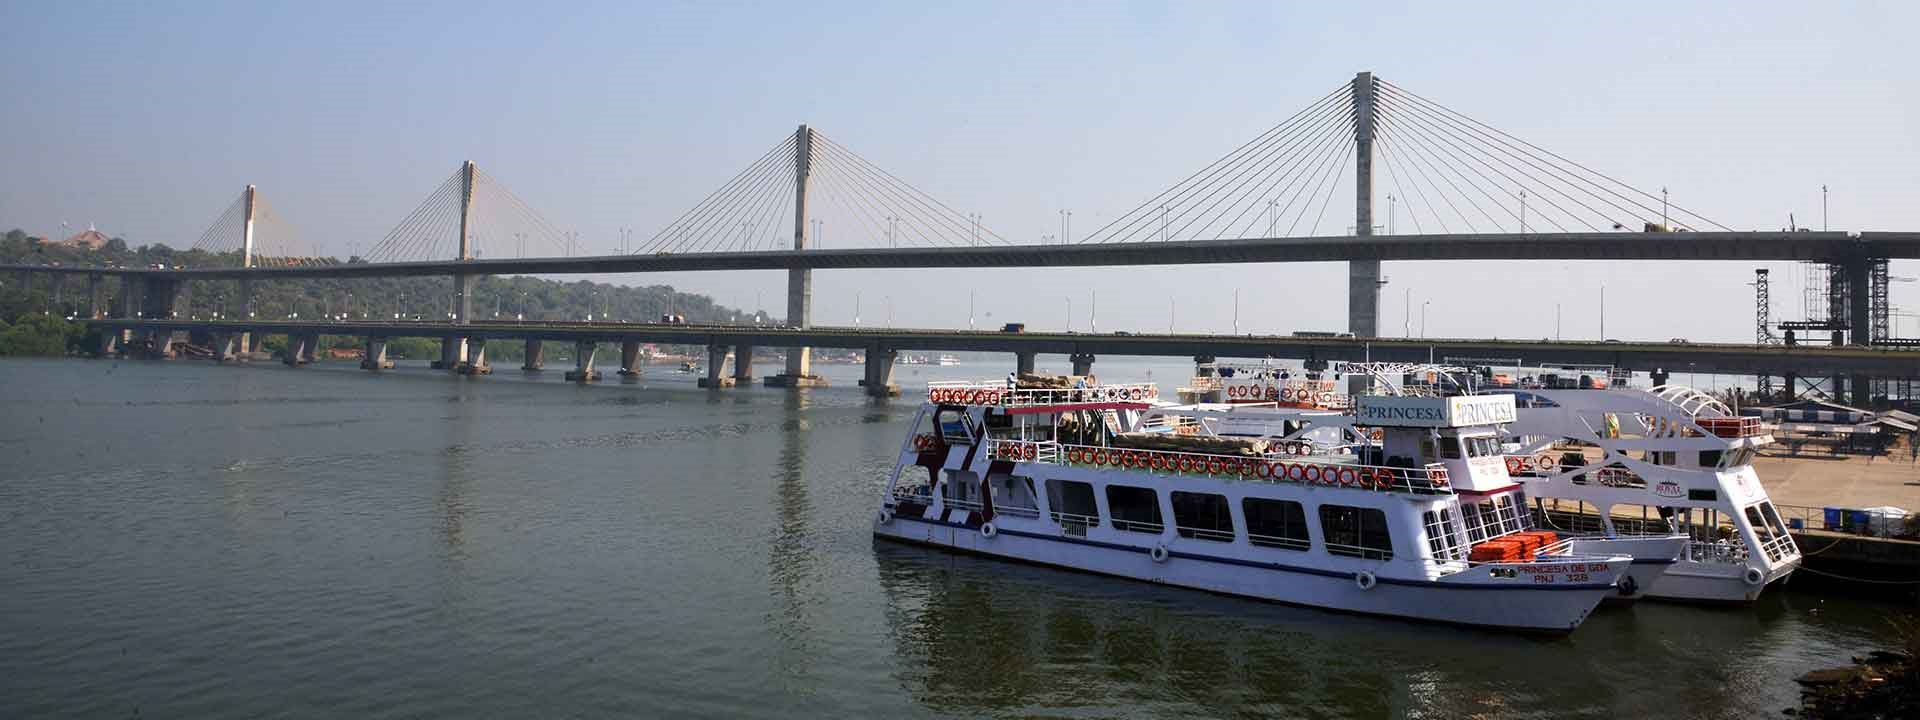 Third Mandovi Bridge Goa- L&T Construction